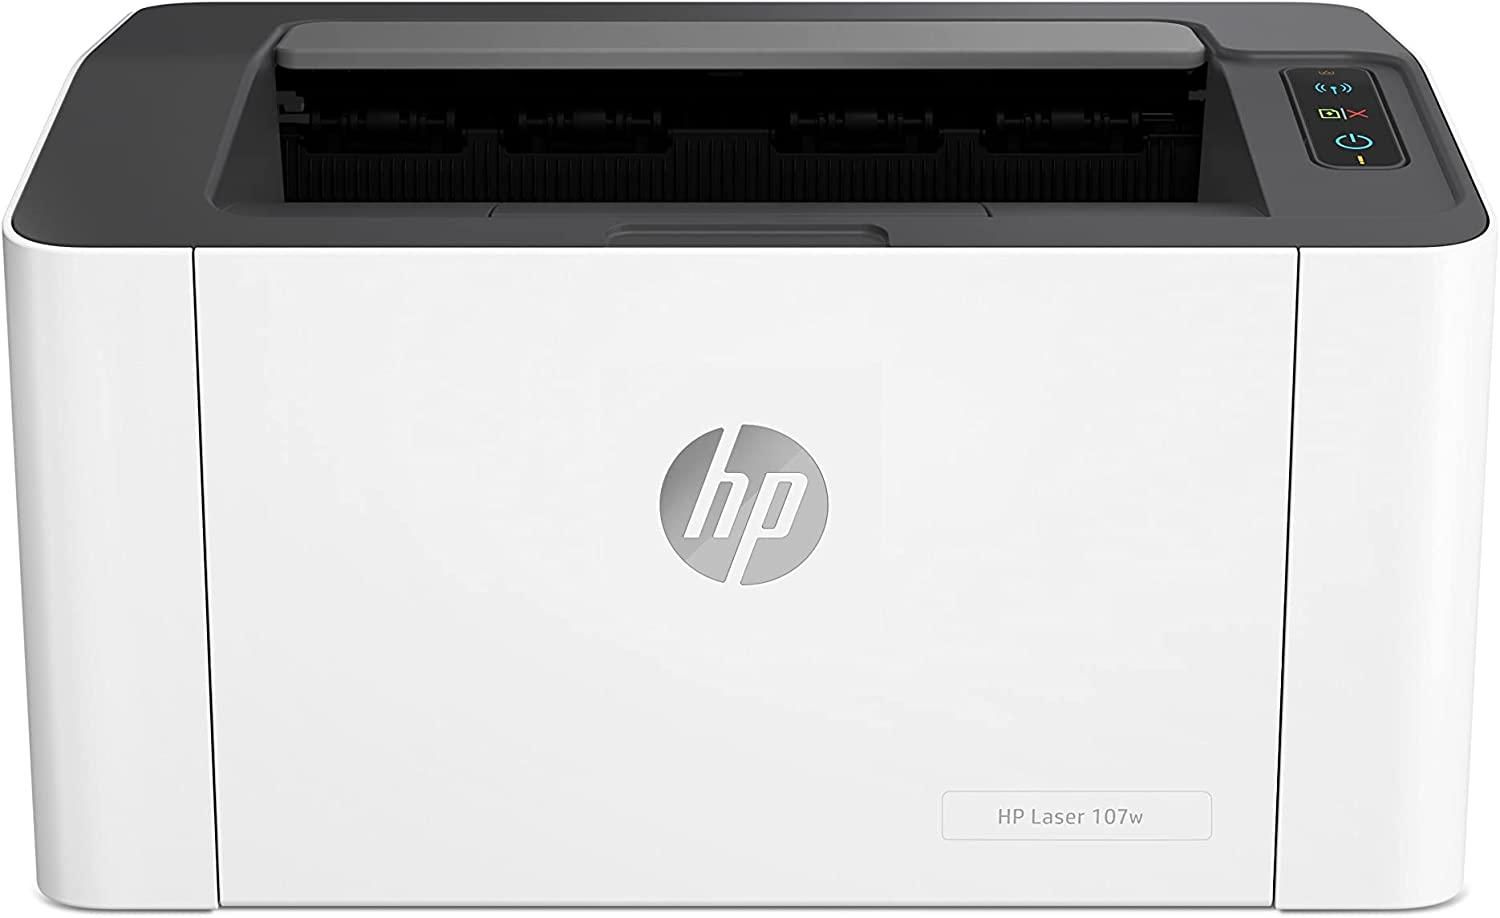 HP 107w Laser Printer, Black and White - 4ZB78A